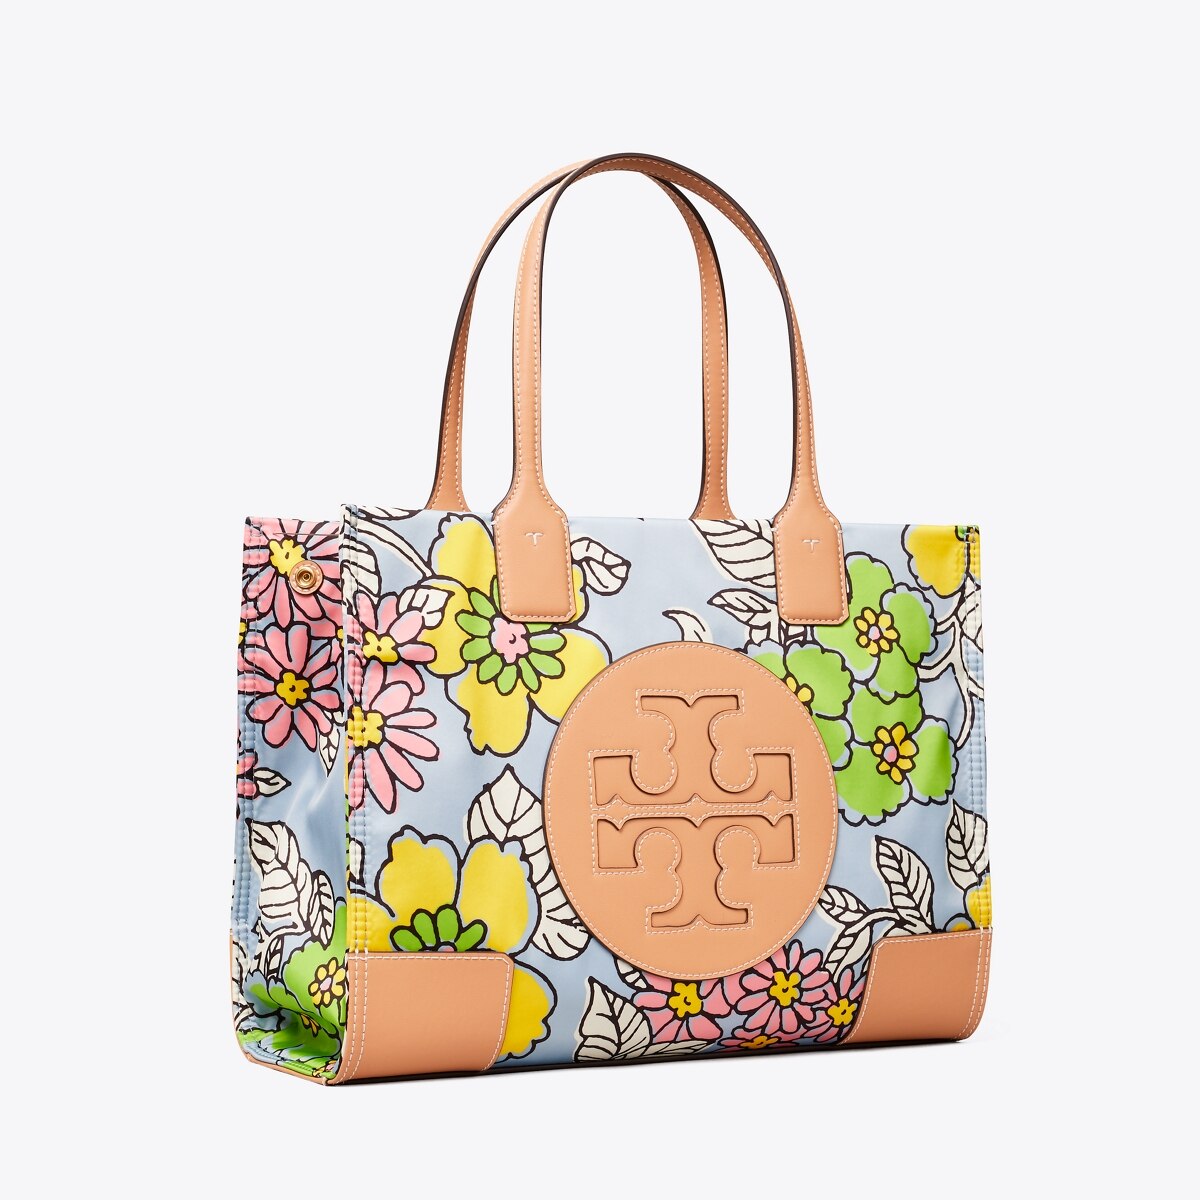 Tory Burch Backpack Handbags For Women | semashow.com